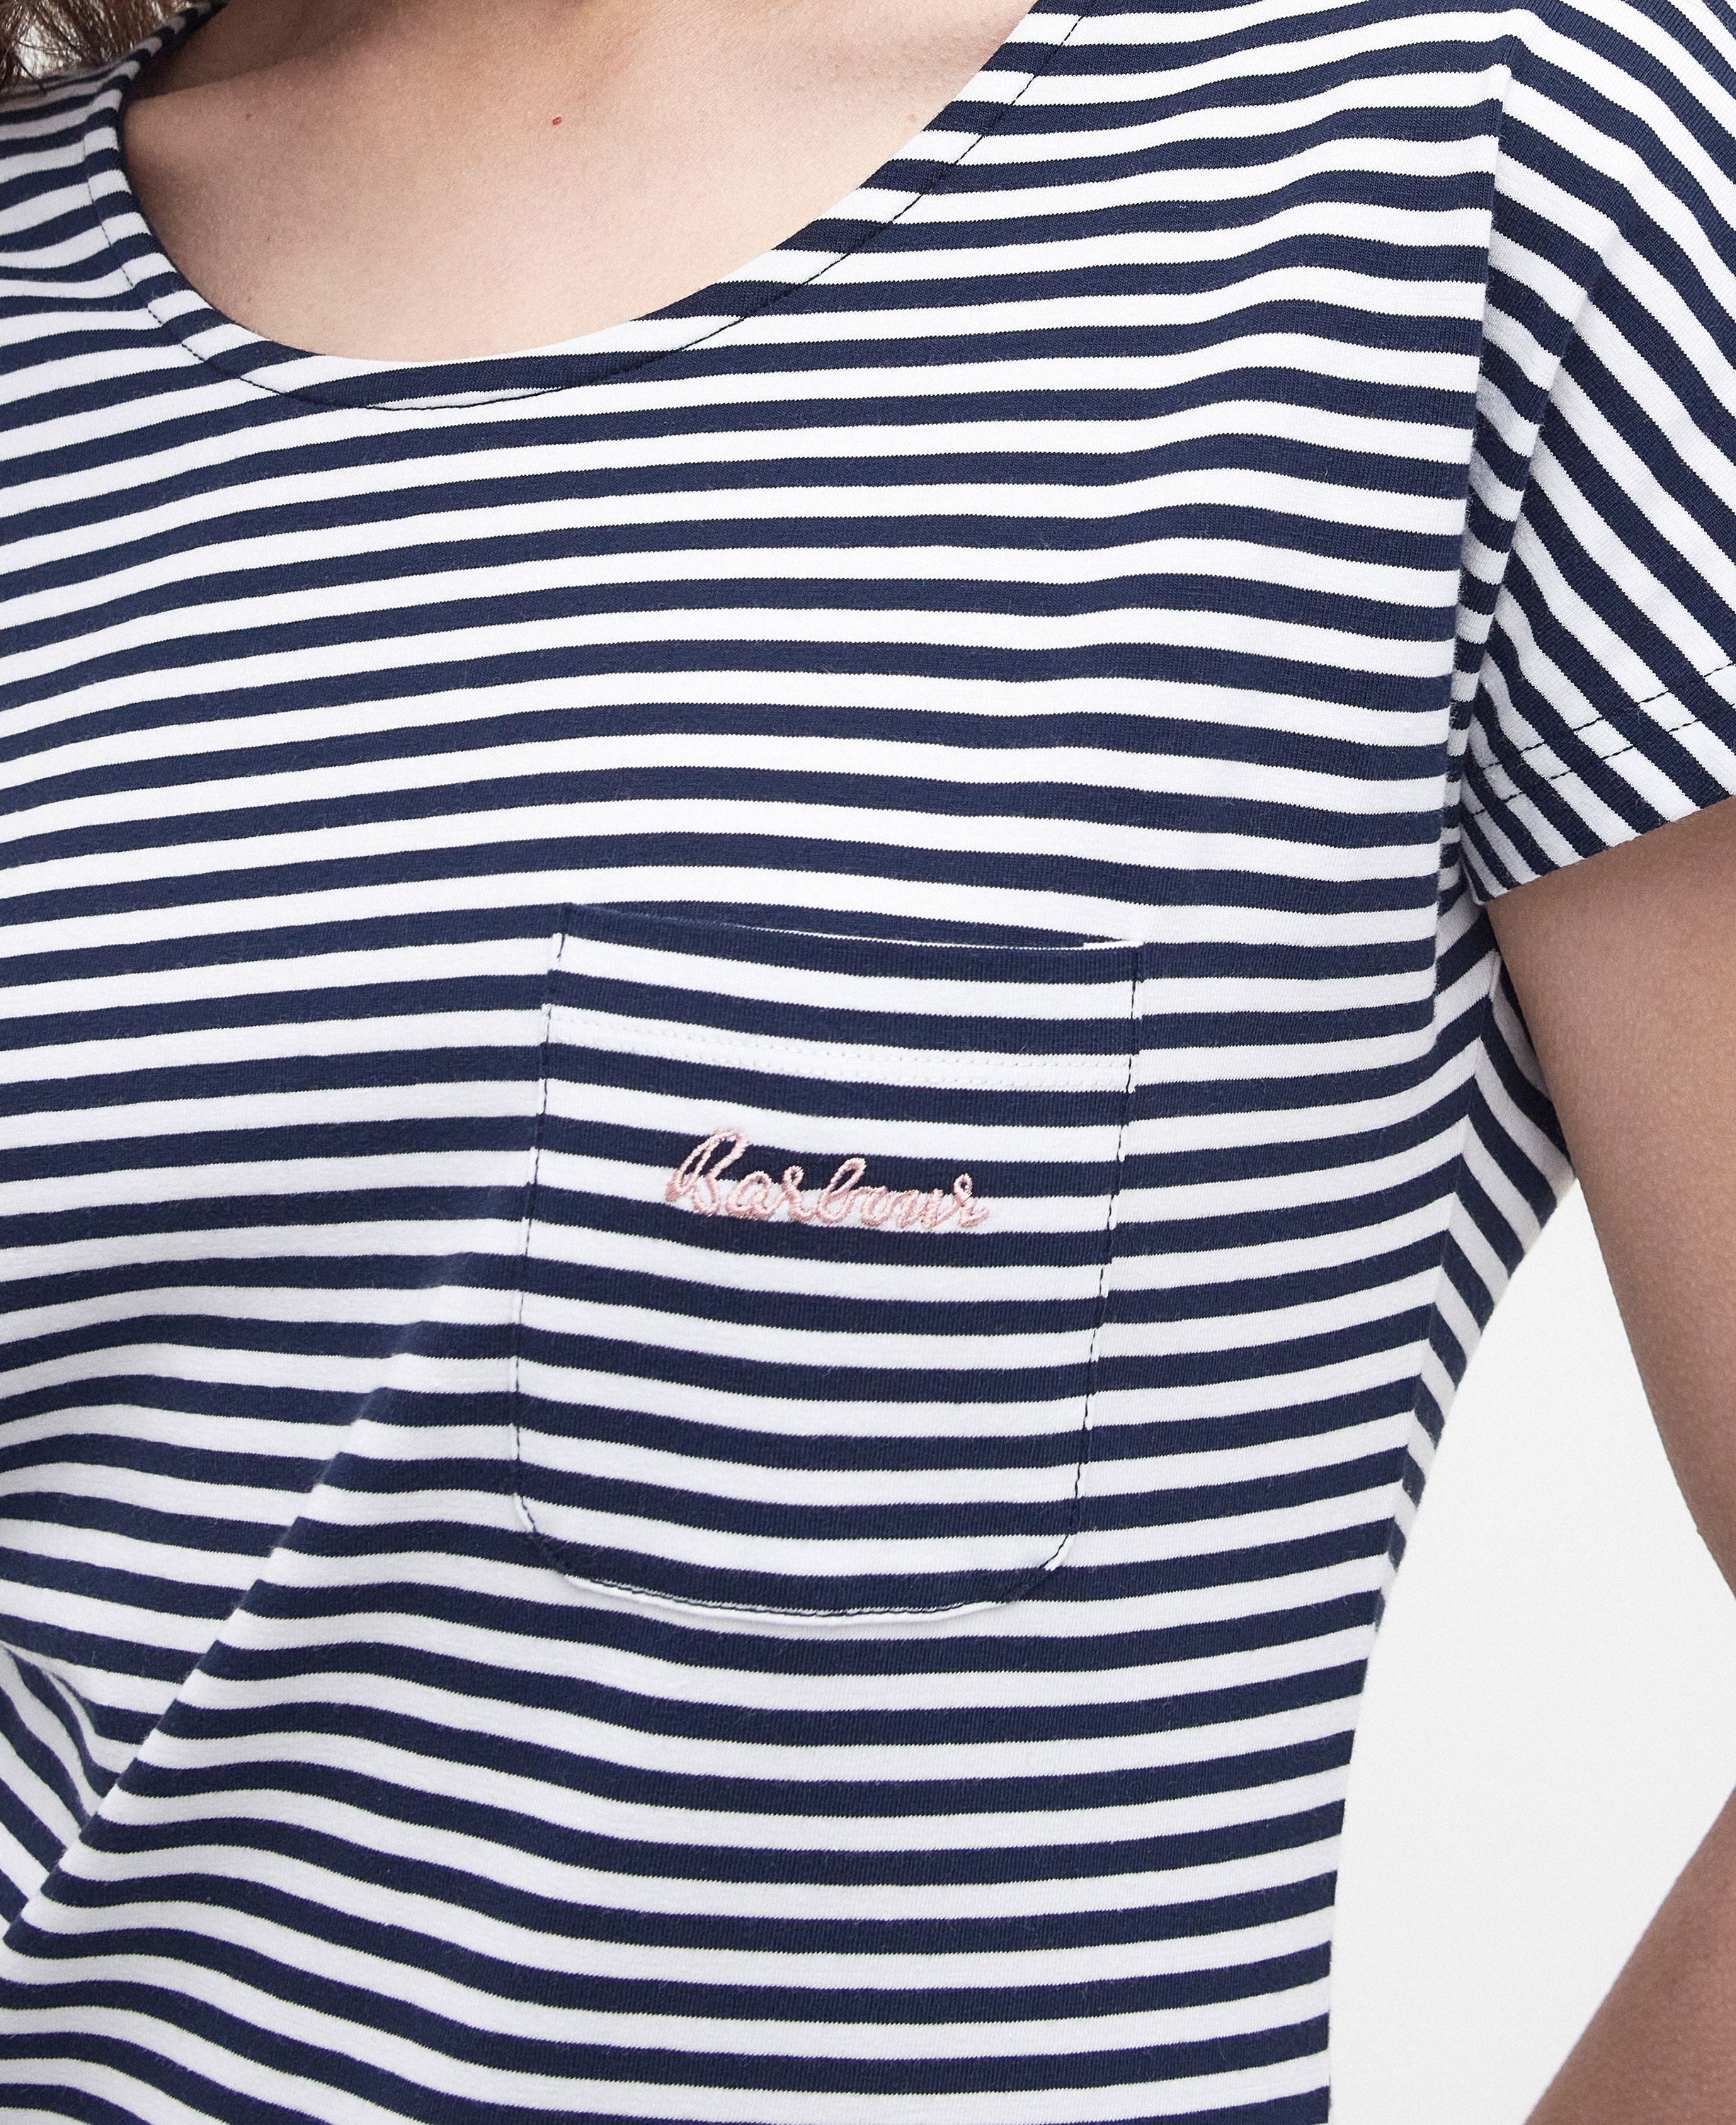 Harewood Stripe Dress - Navy Multi Stripe